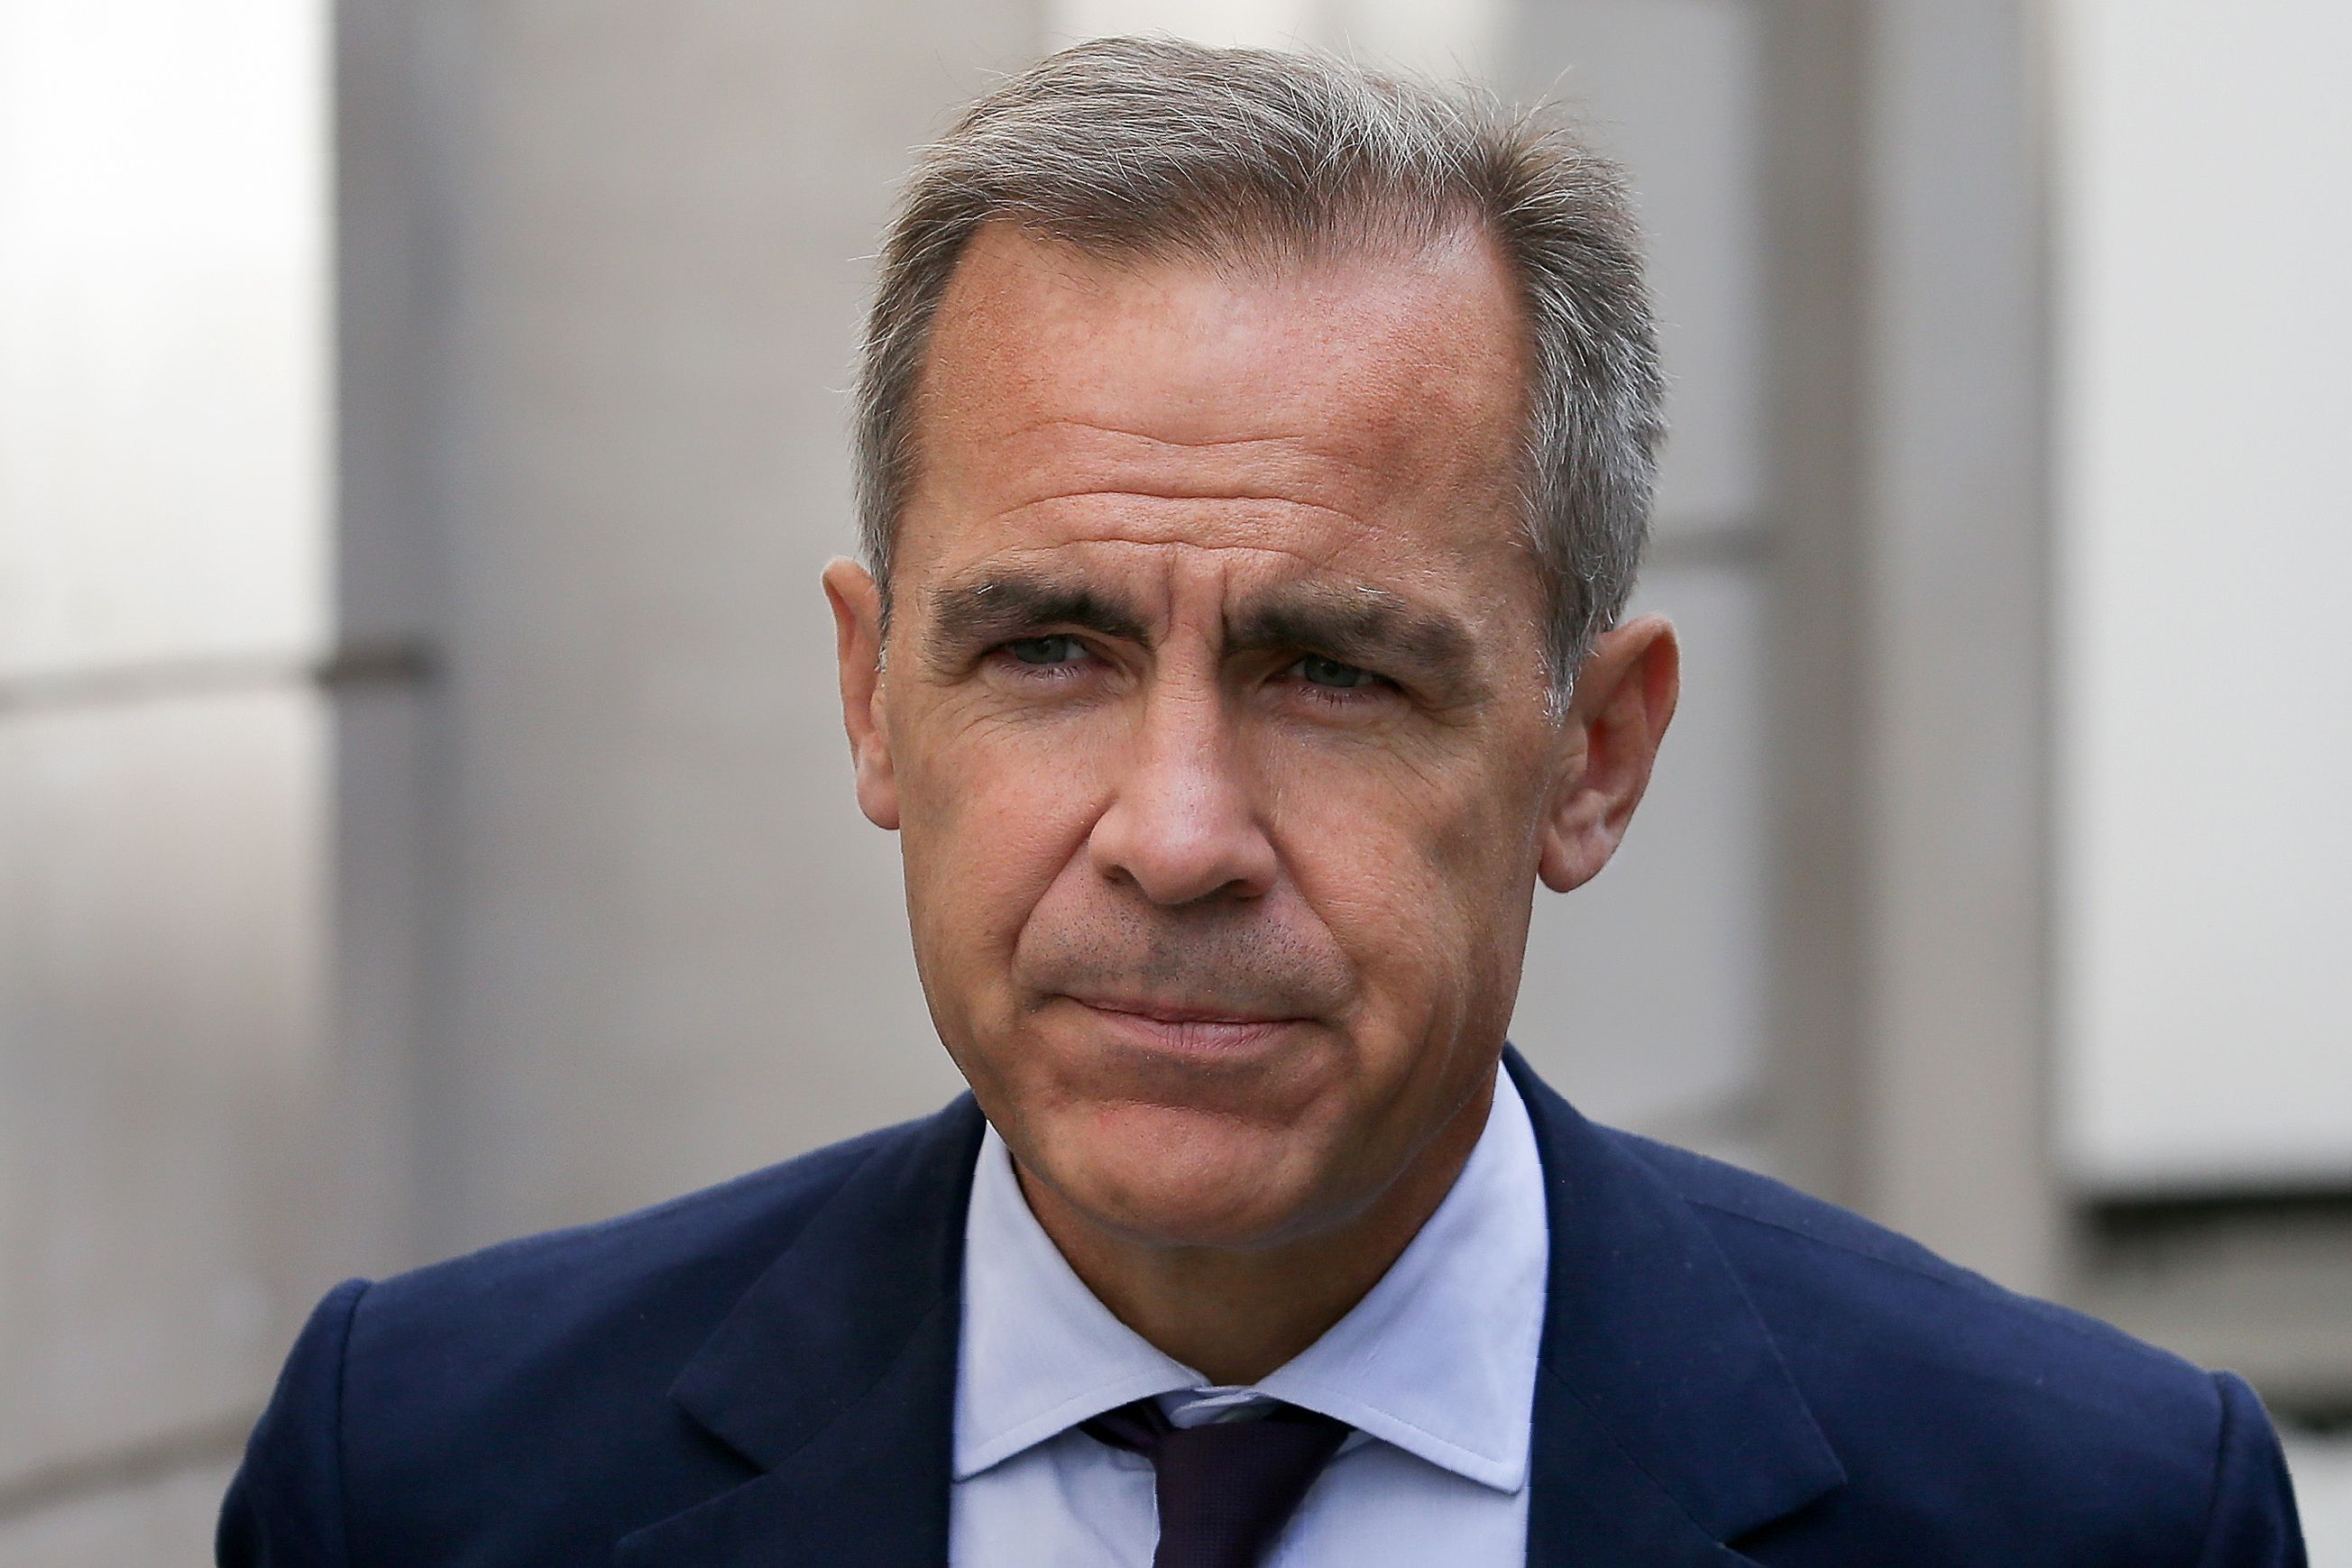 Gobernador del Banco de Inglaterra, Mark Carney. (Foto: AFP)